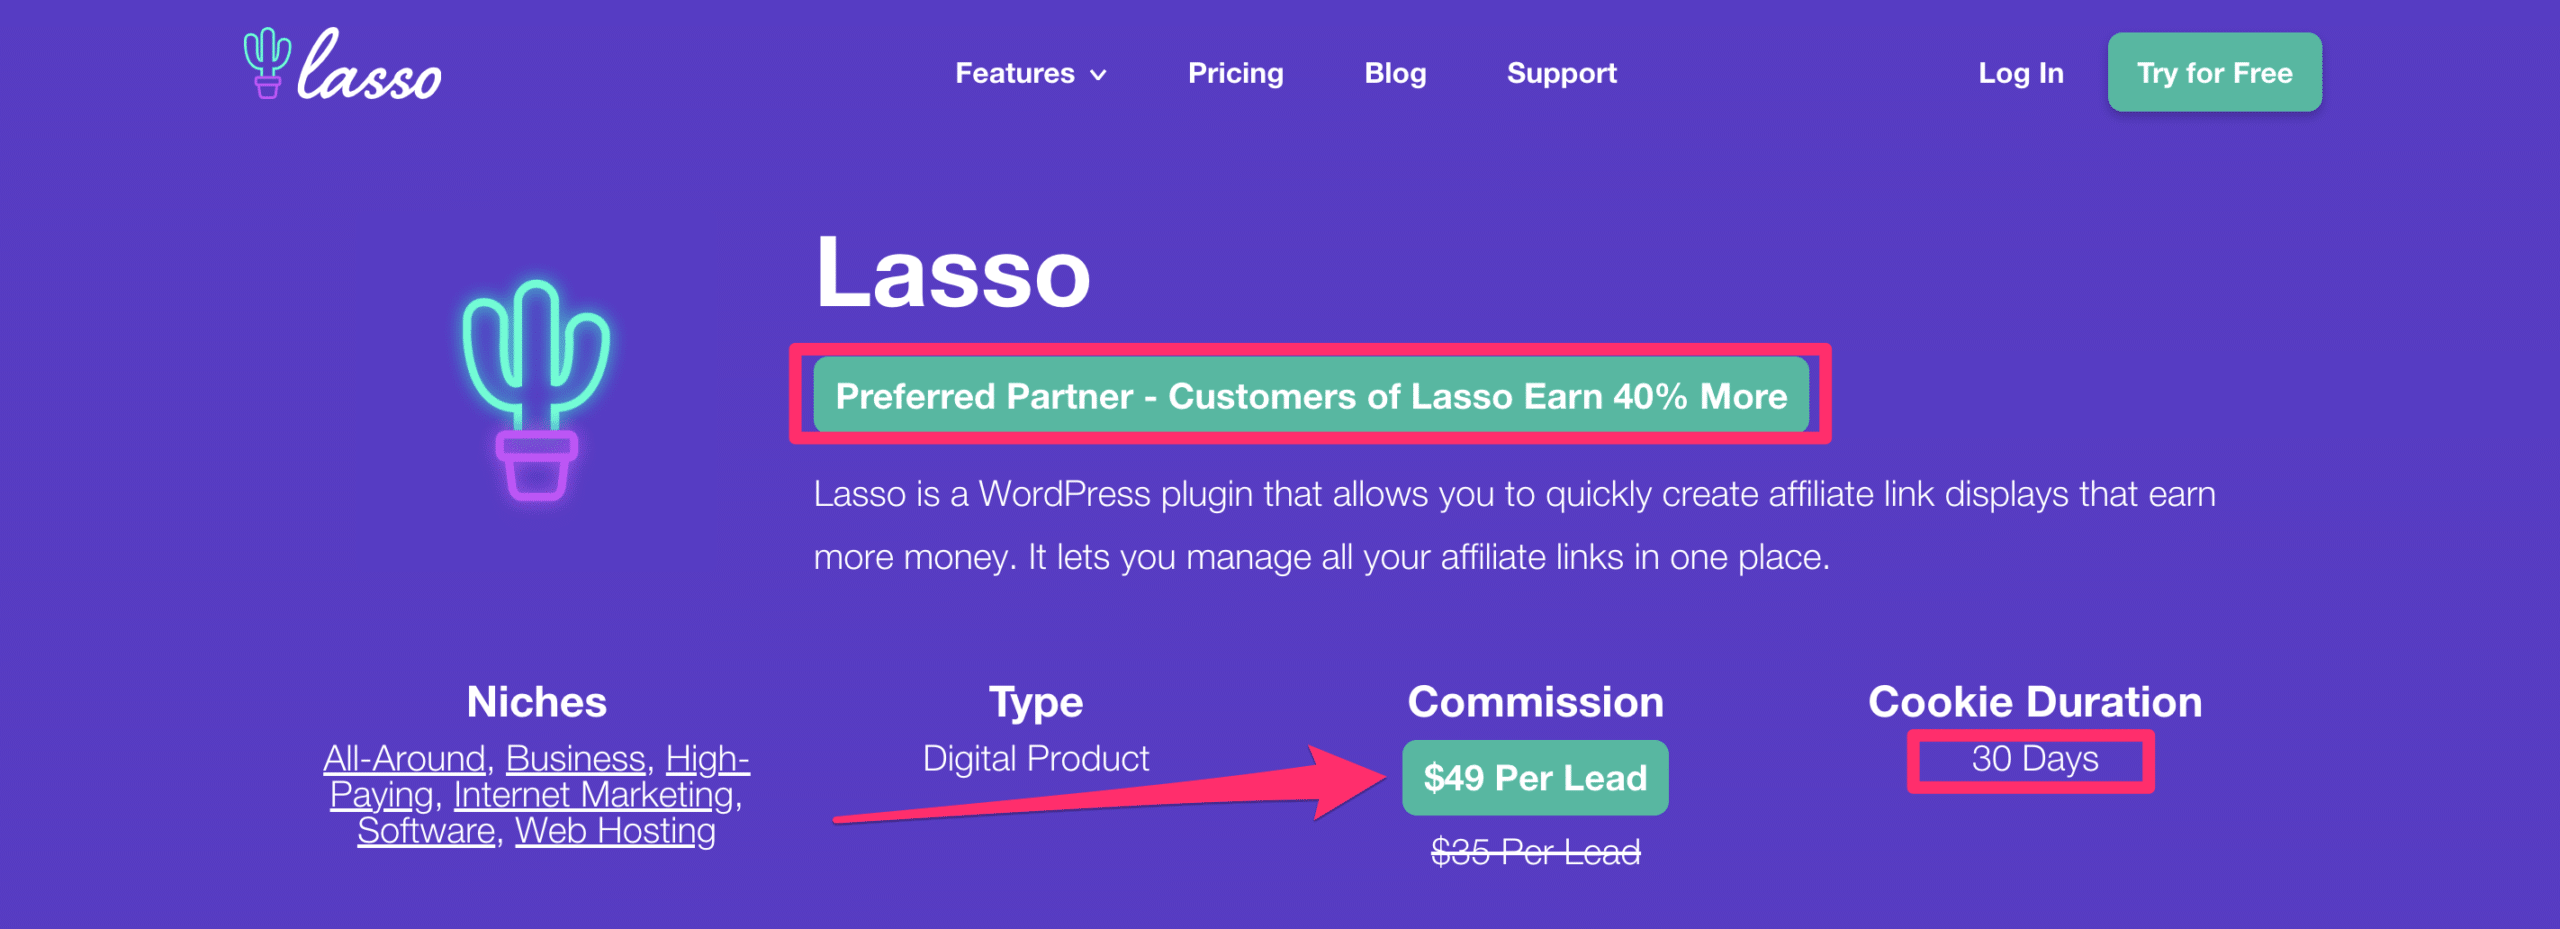 lasso partner program sign up page